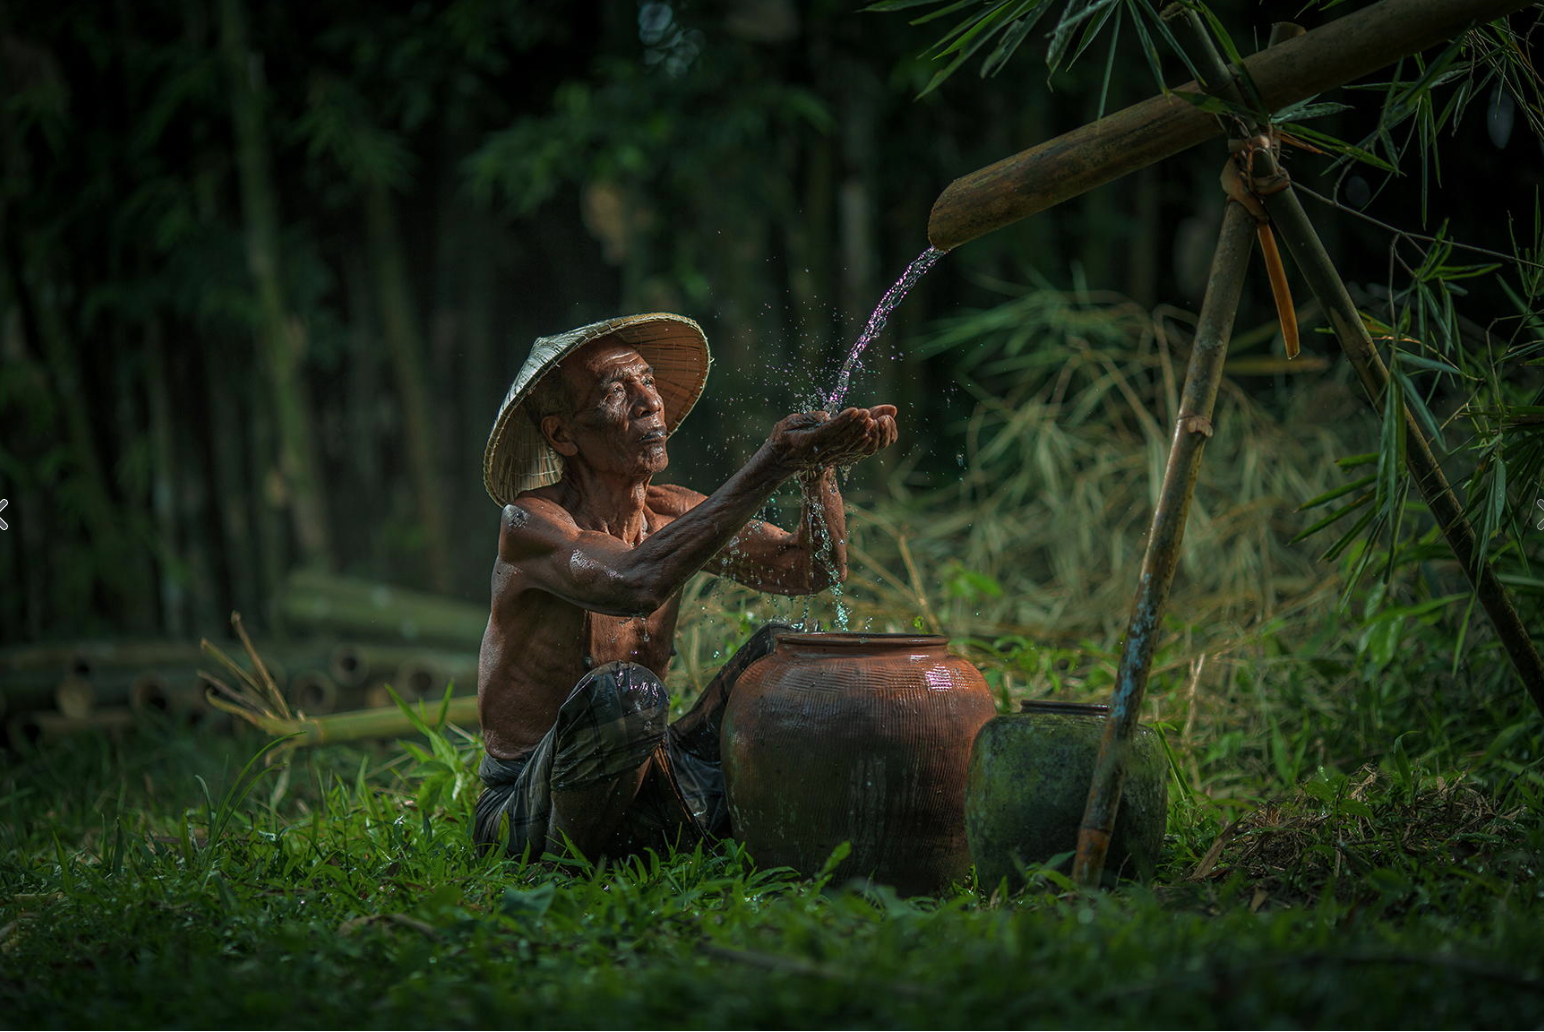 Abe Less – Natural ressources – Malaisian photographer